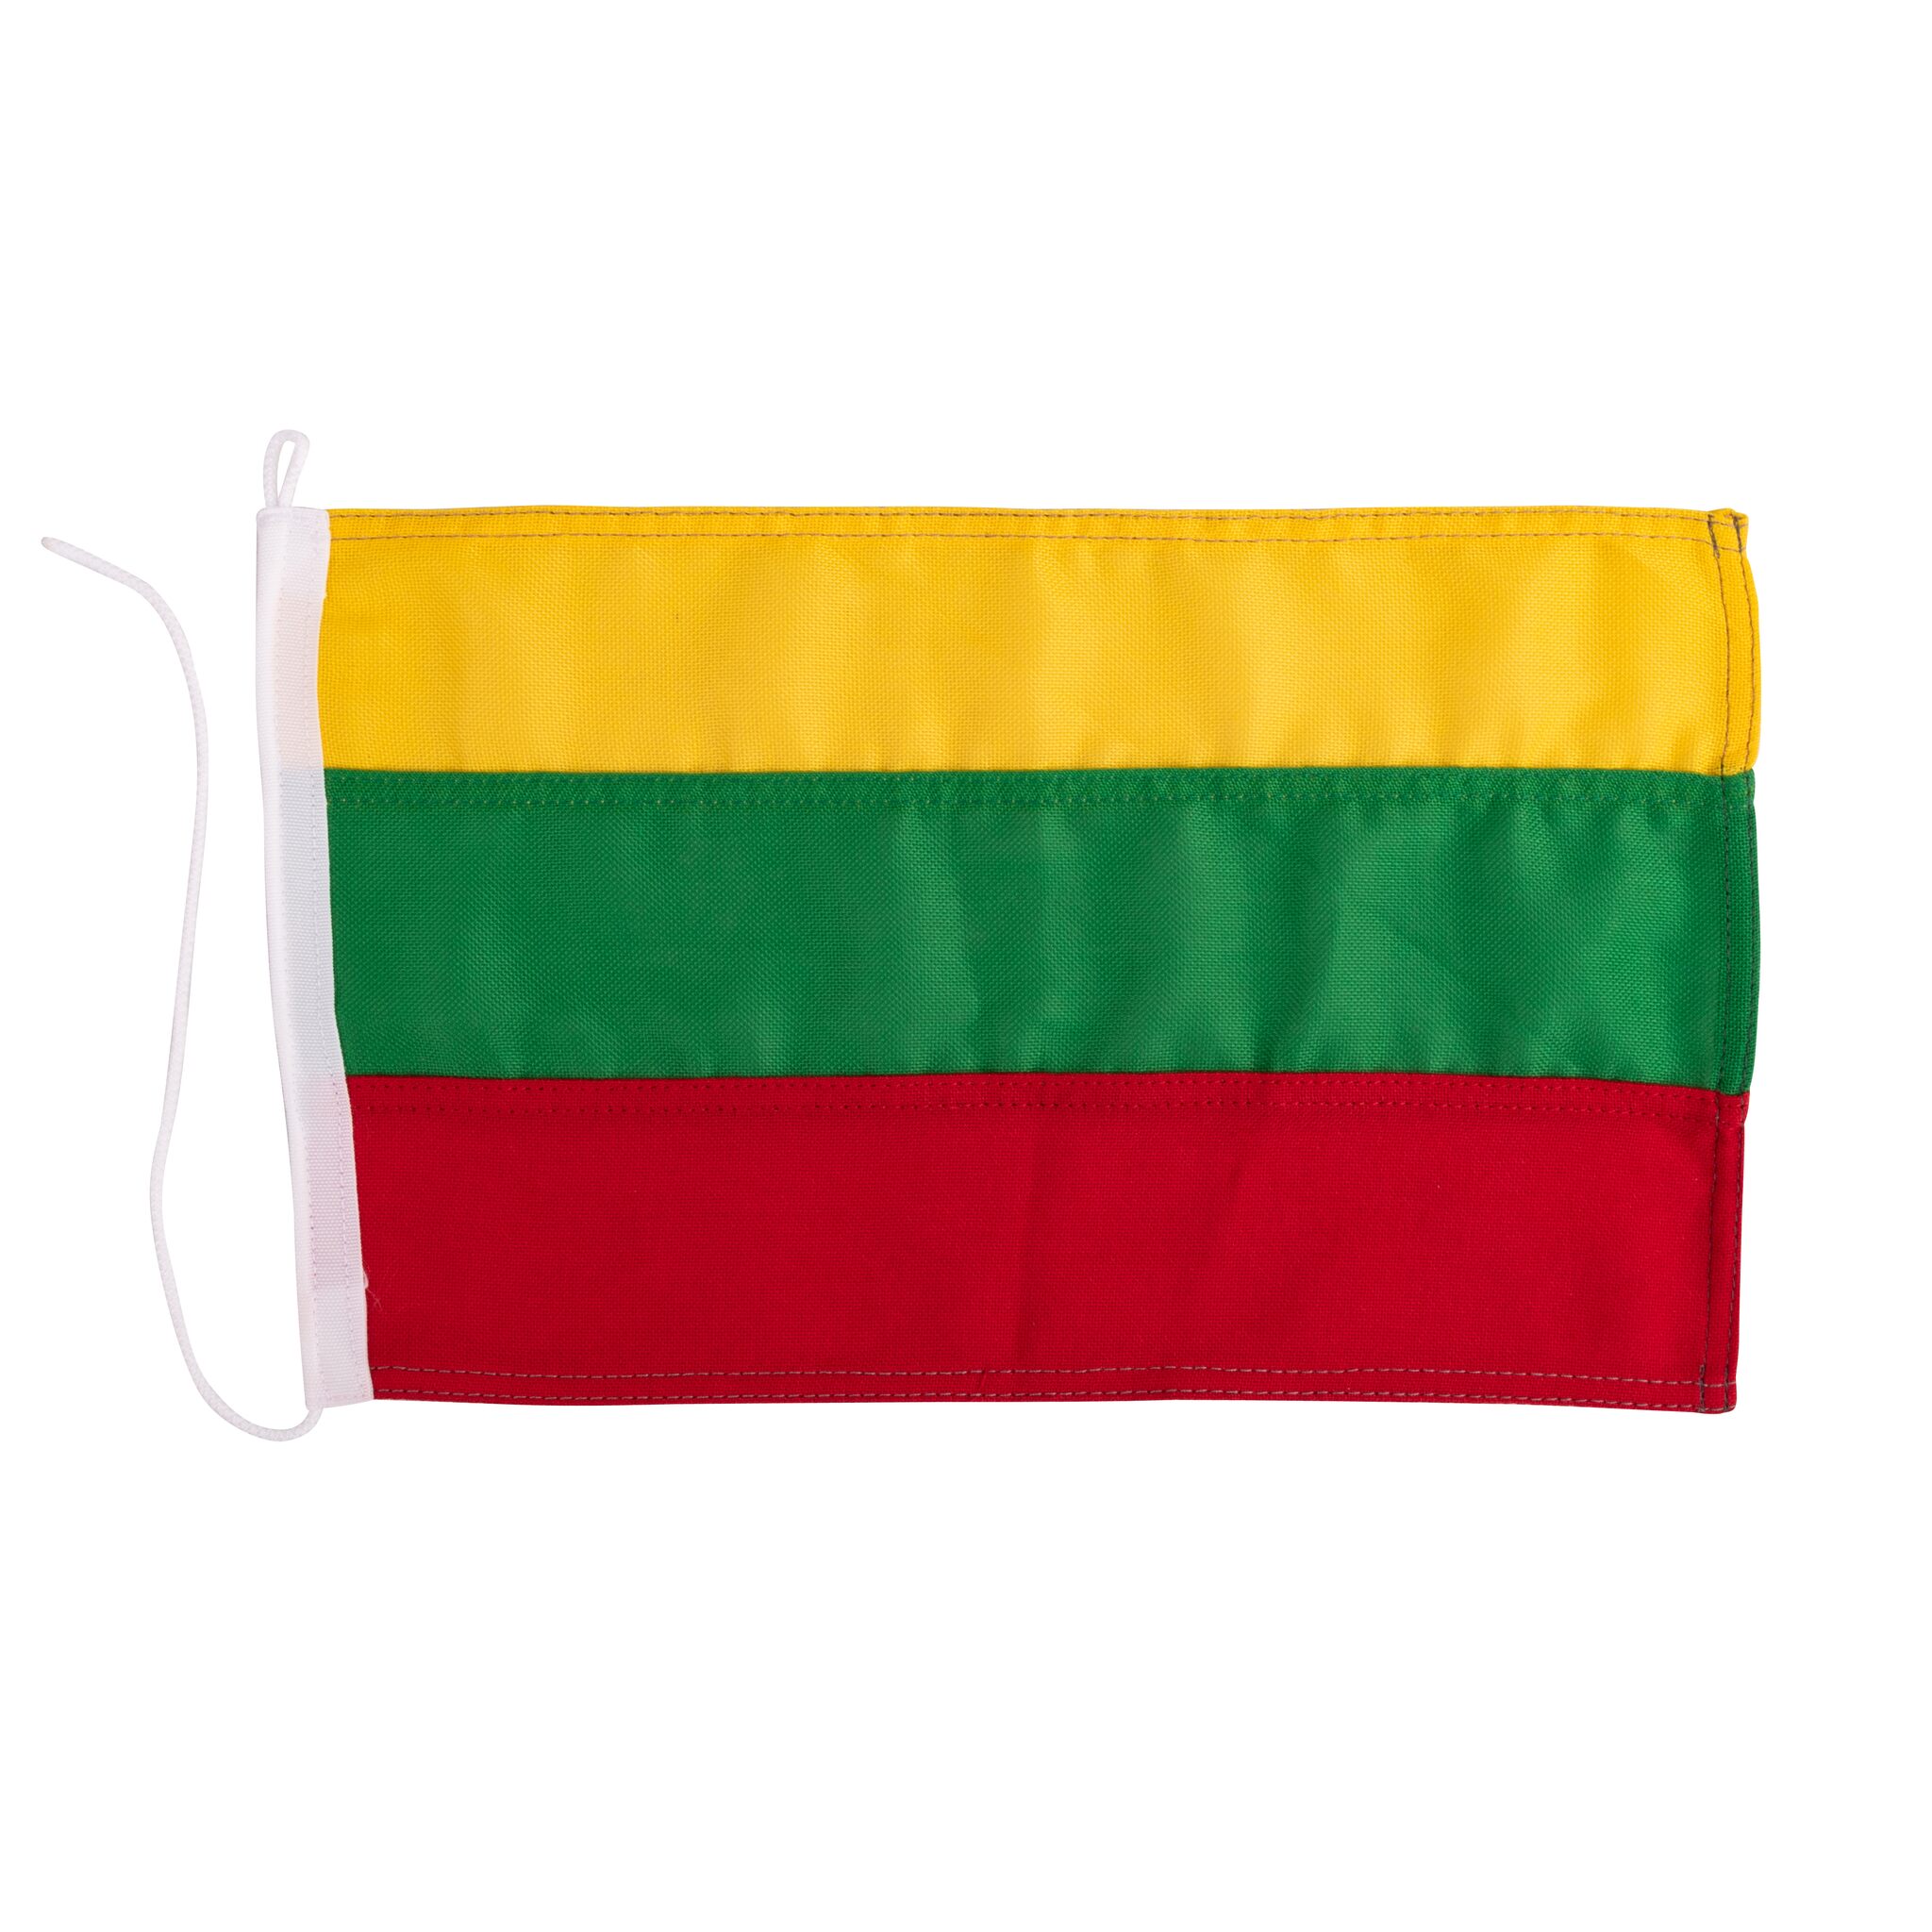 Gastlandflagge Litauen